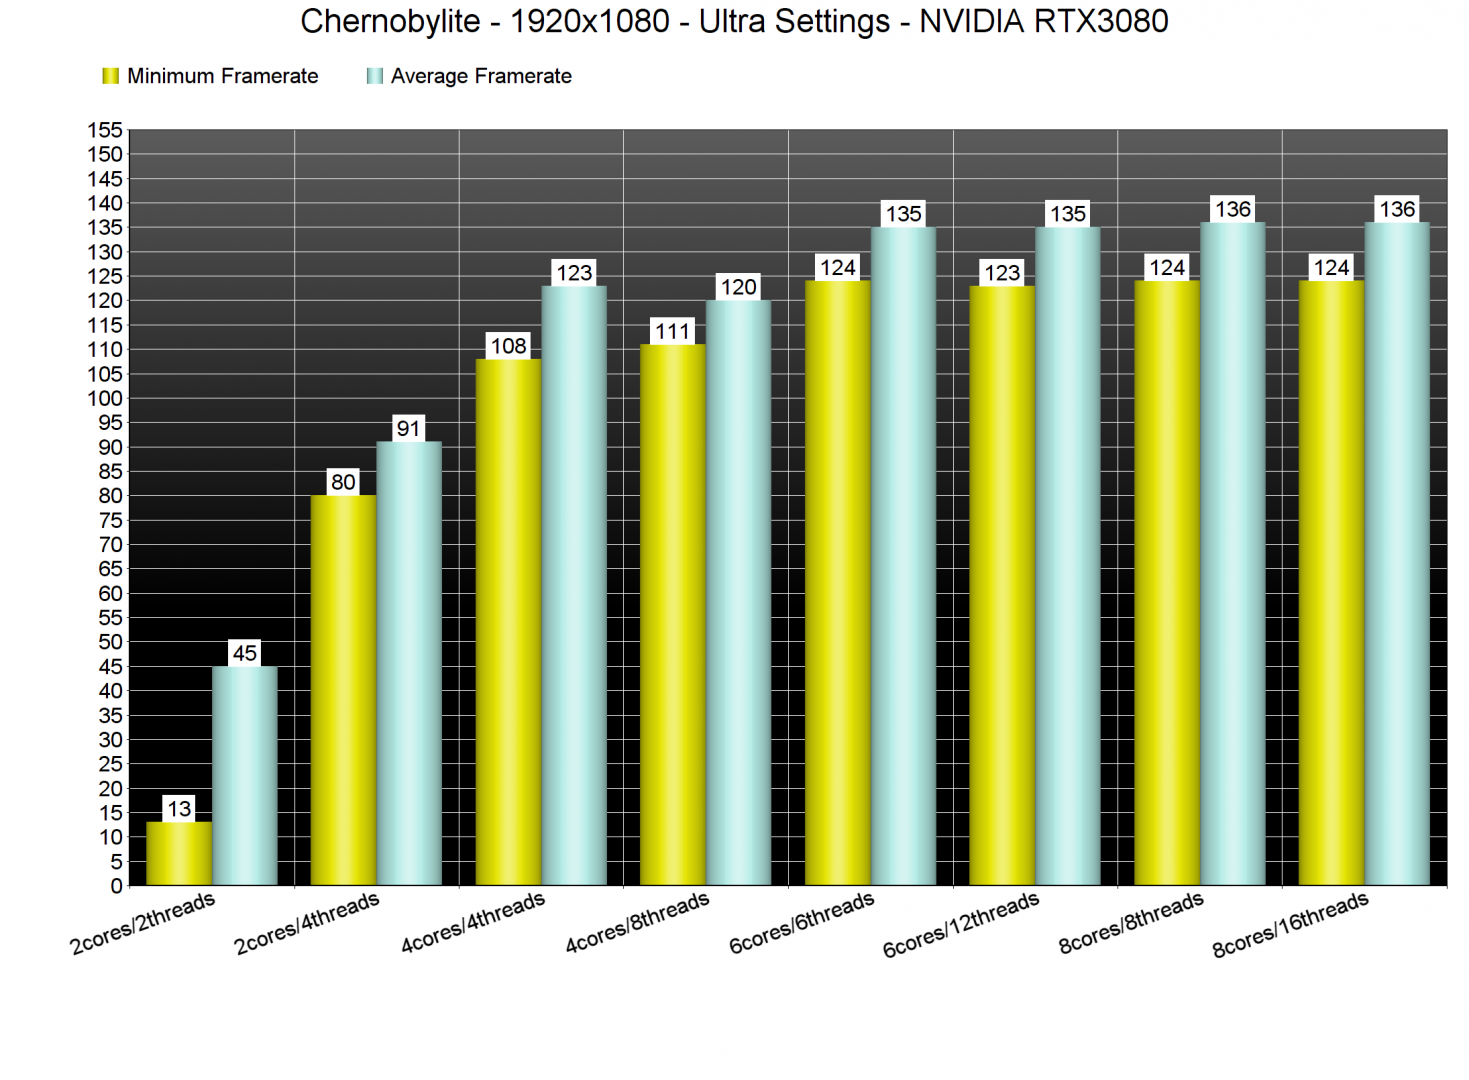 Chernobylite CPU benchmarks